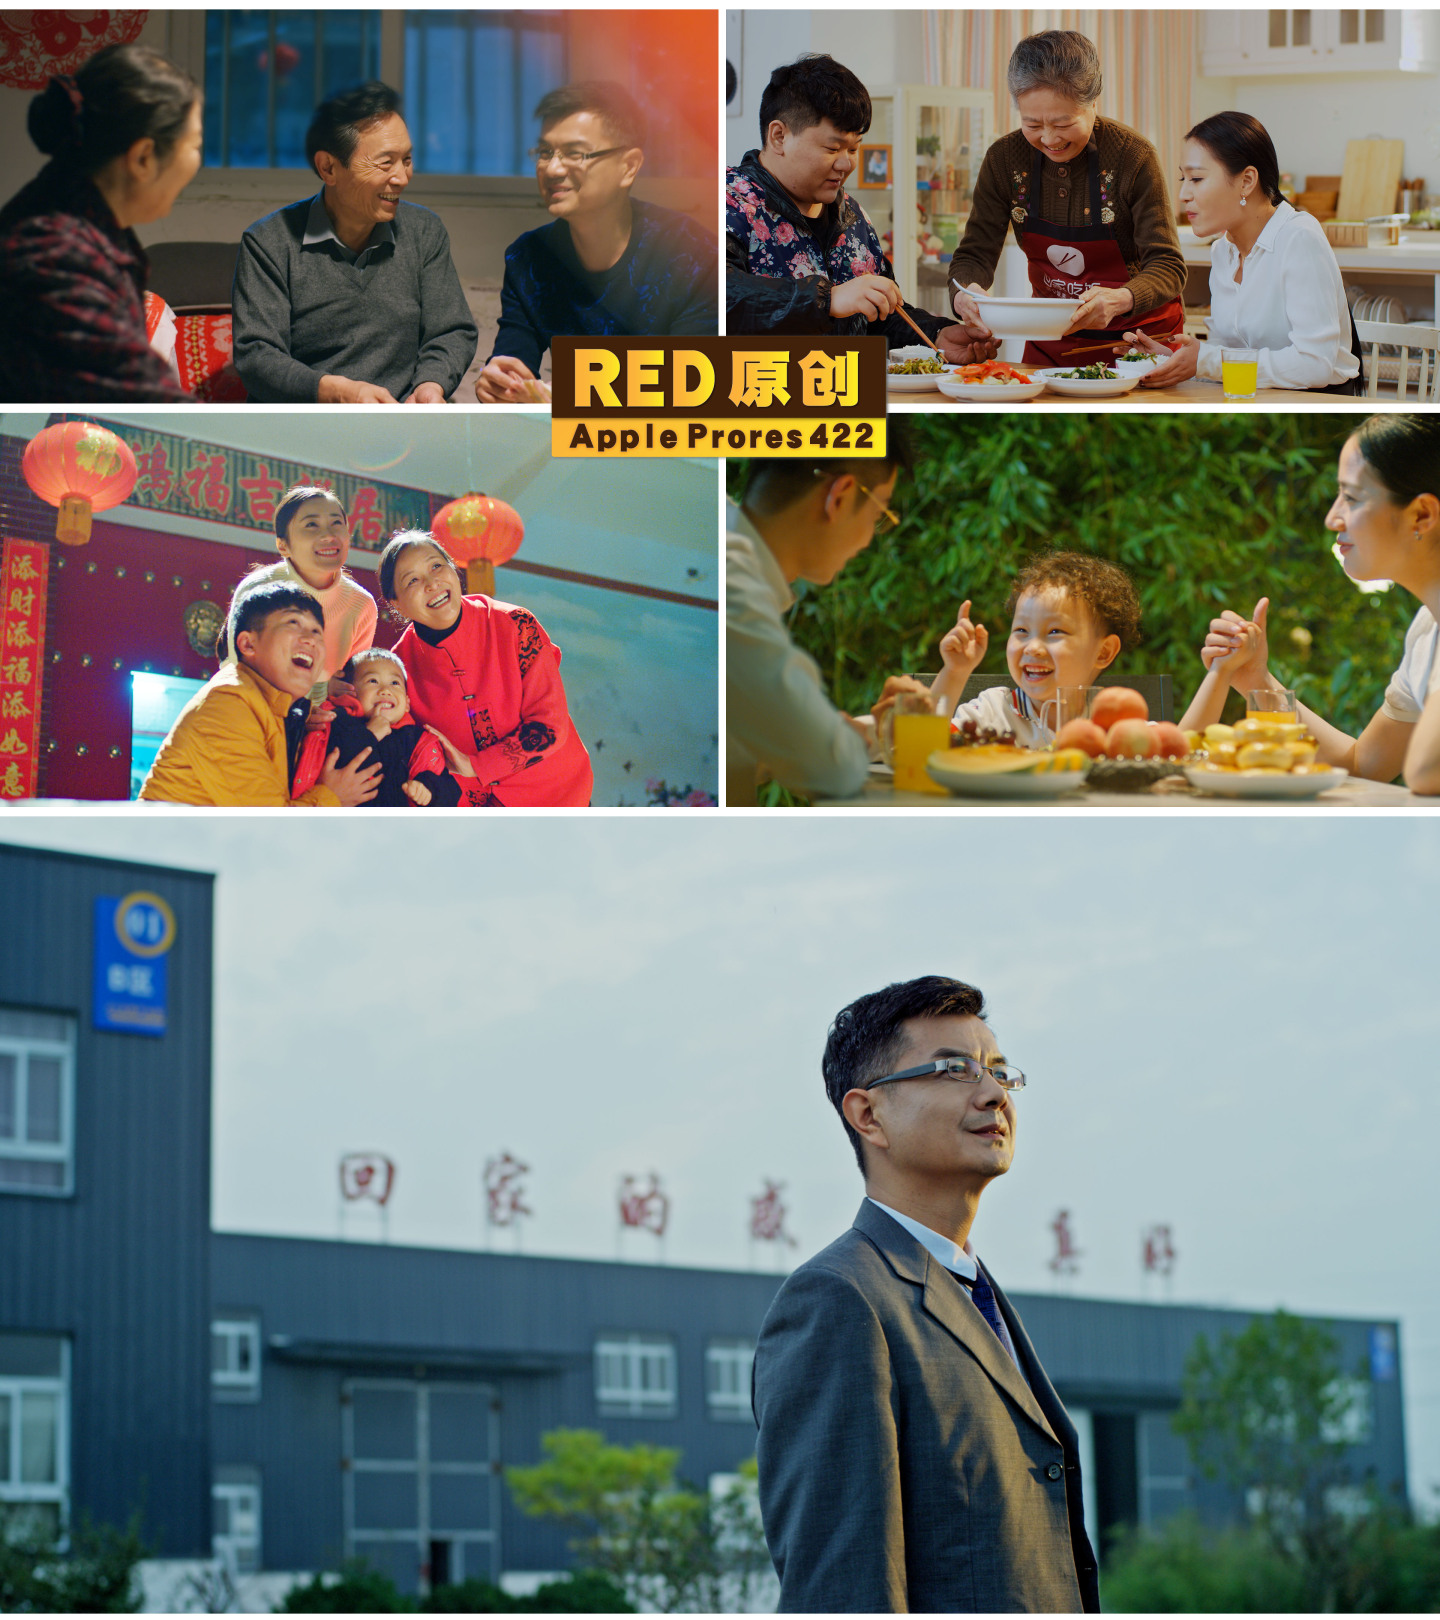 「RED拍摄」春节过年气氛家人团聚一组